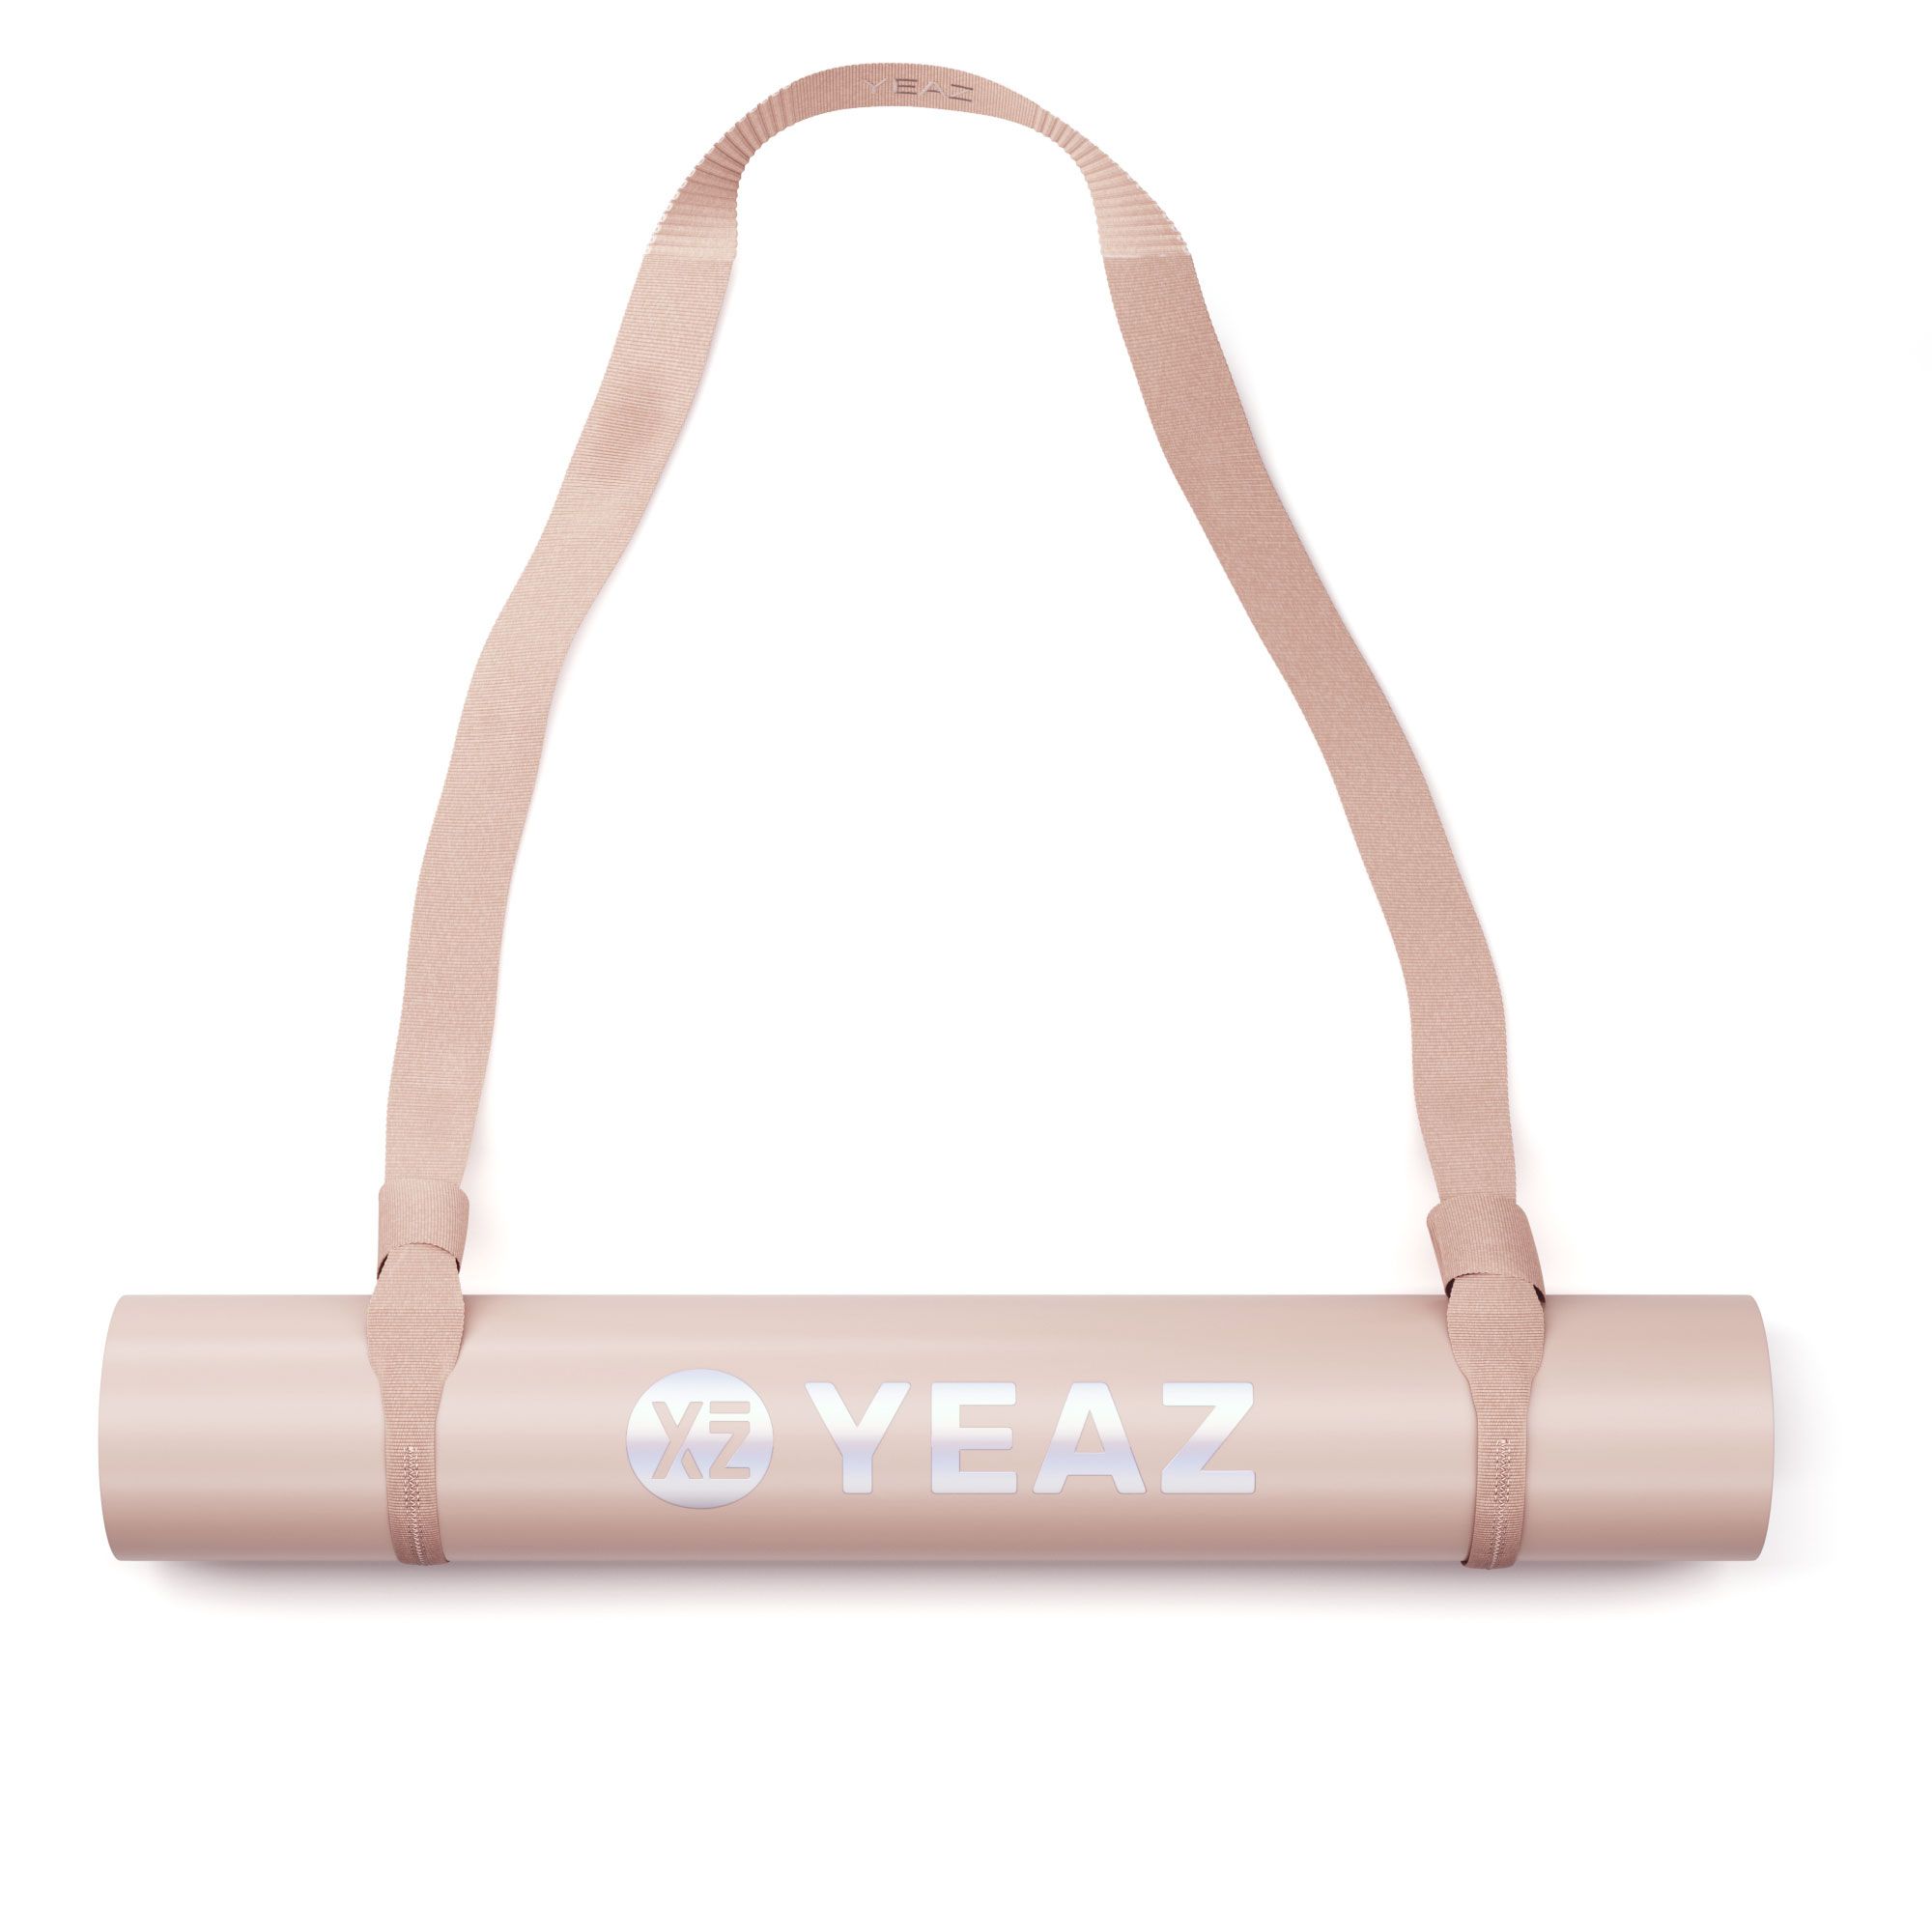 Yeaz Move UP Set - Yogaband & Yogamatte